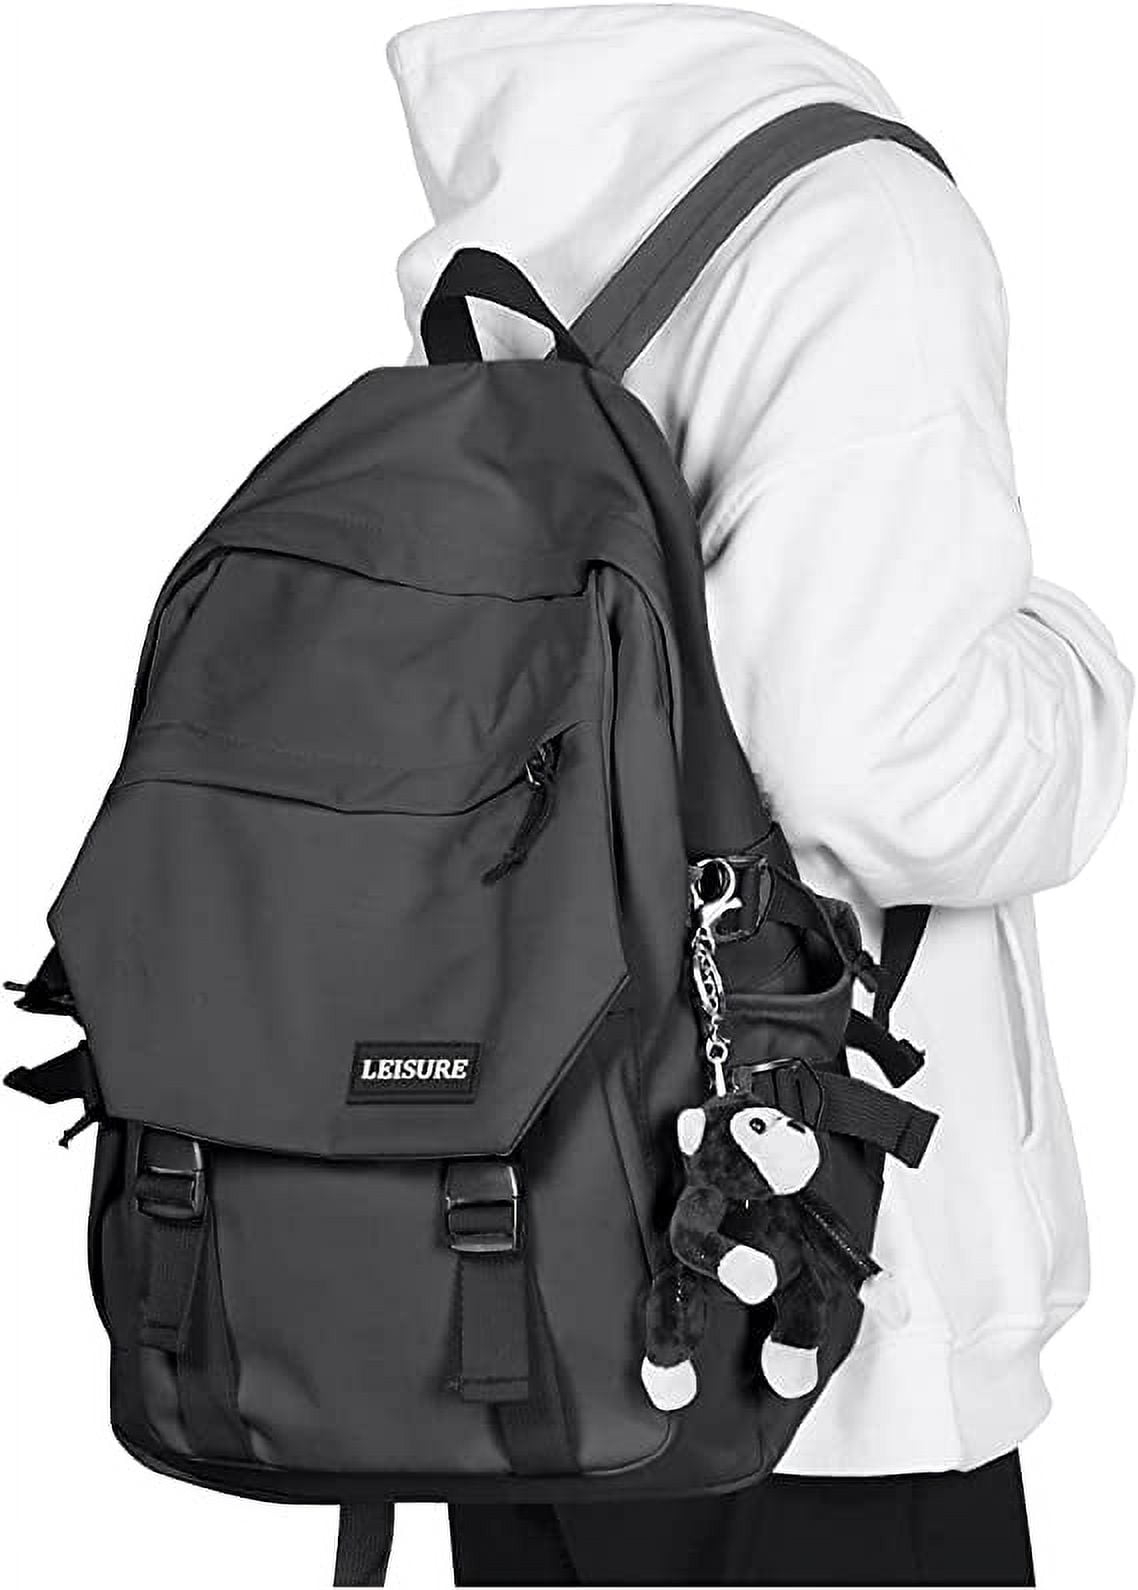 Waterproof,Lightweight,Portable Mini Classic Backpack Geometric